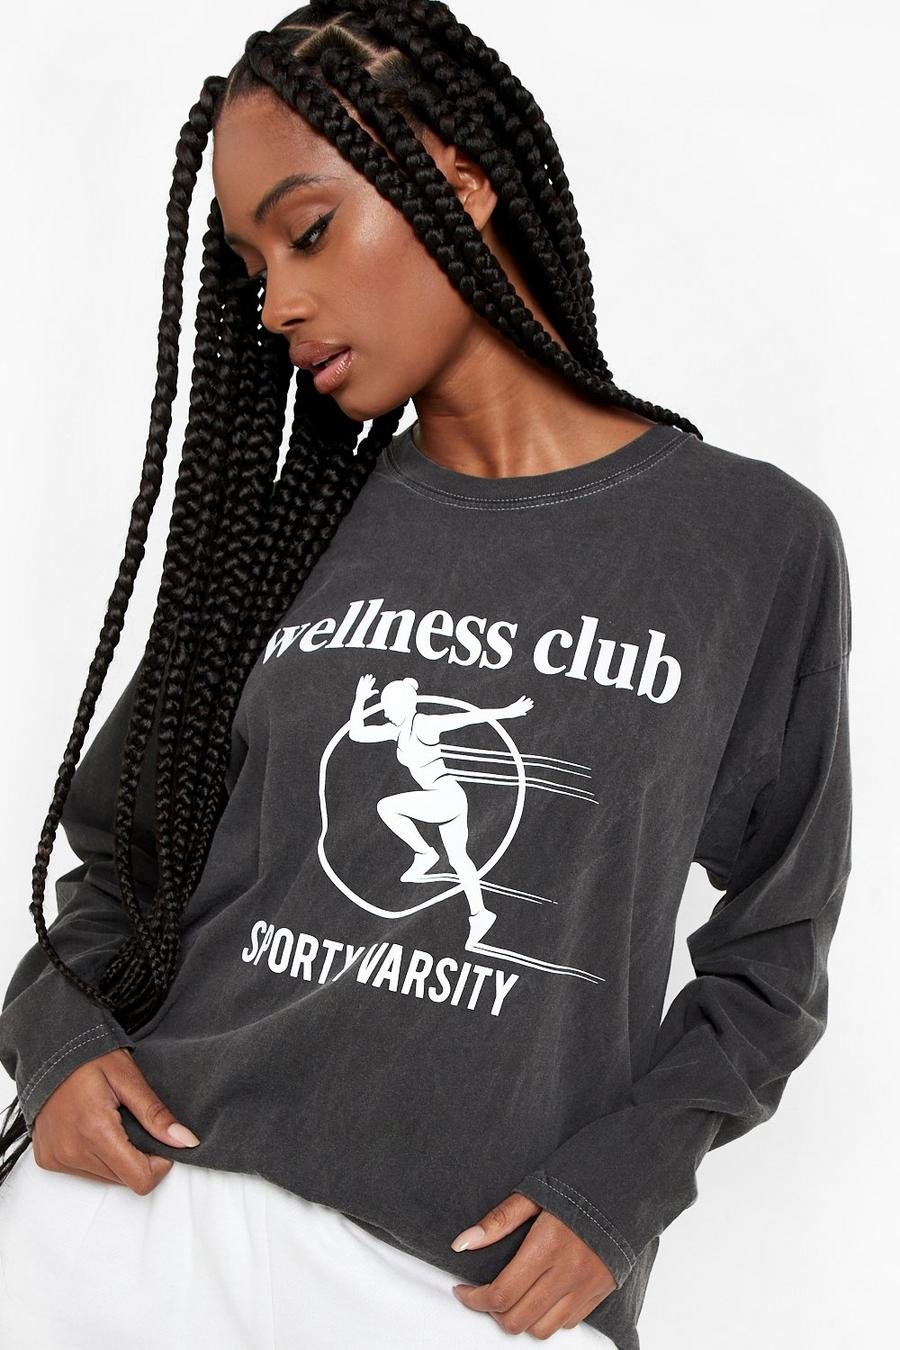 Camiseta oversize de manga larga con estampado de Wellness Club, Black negro